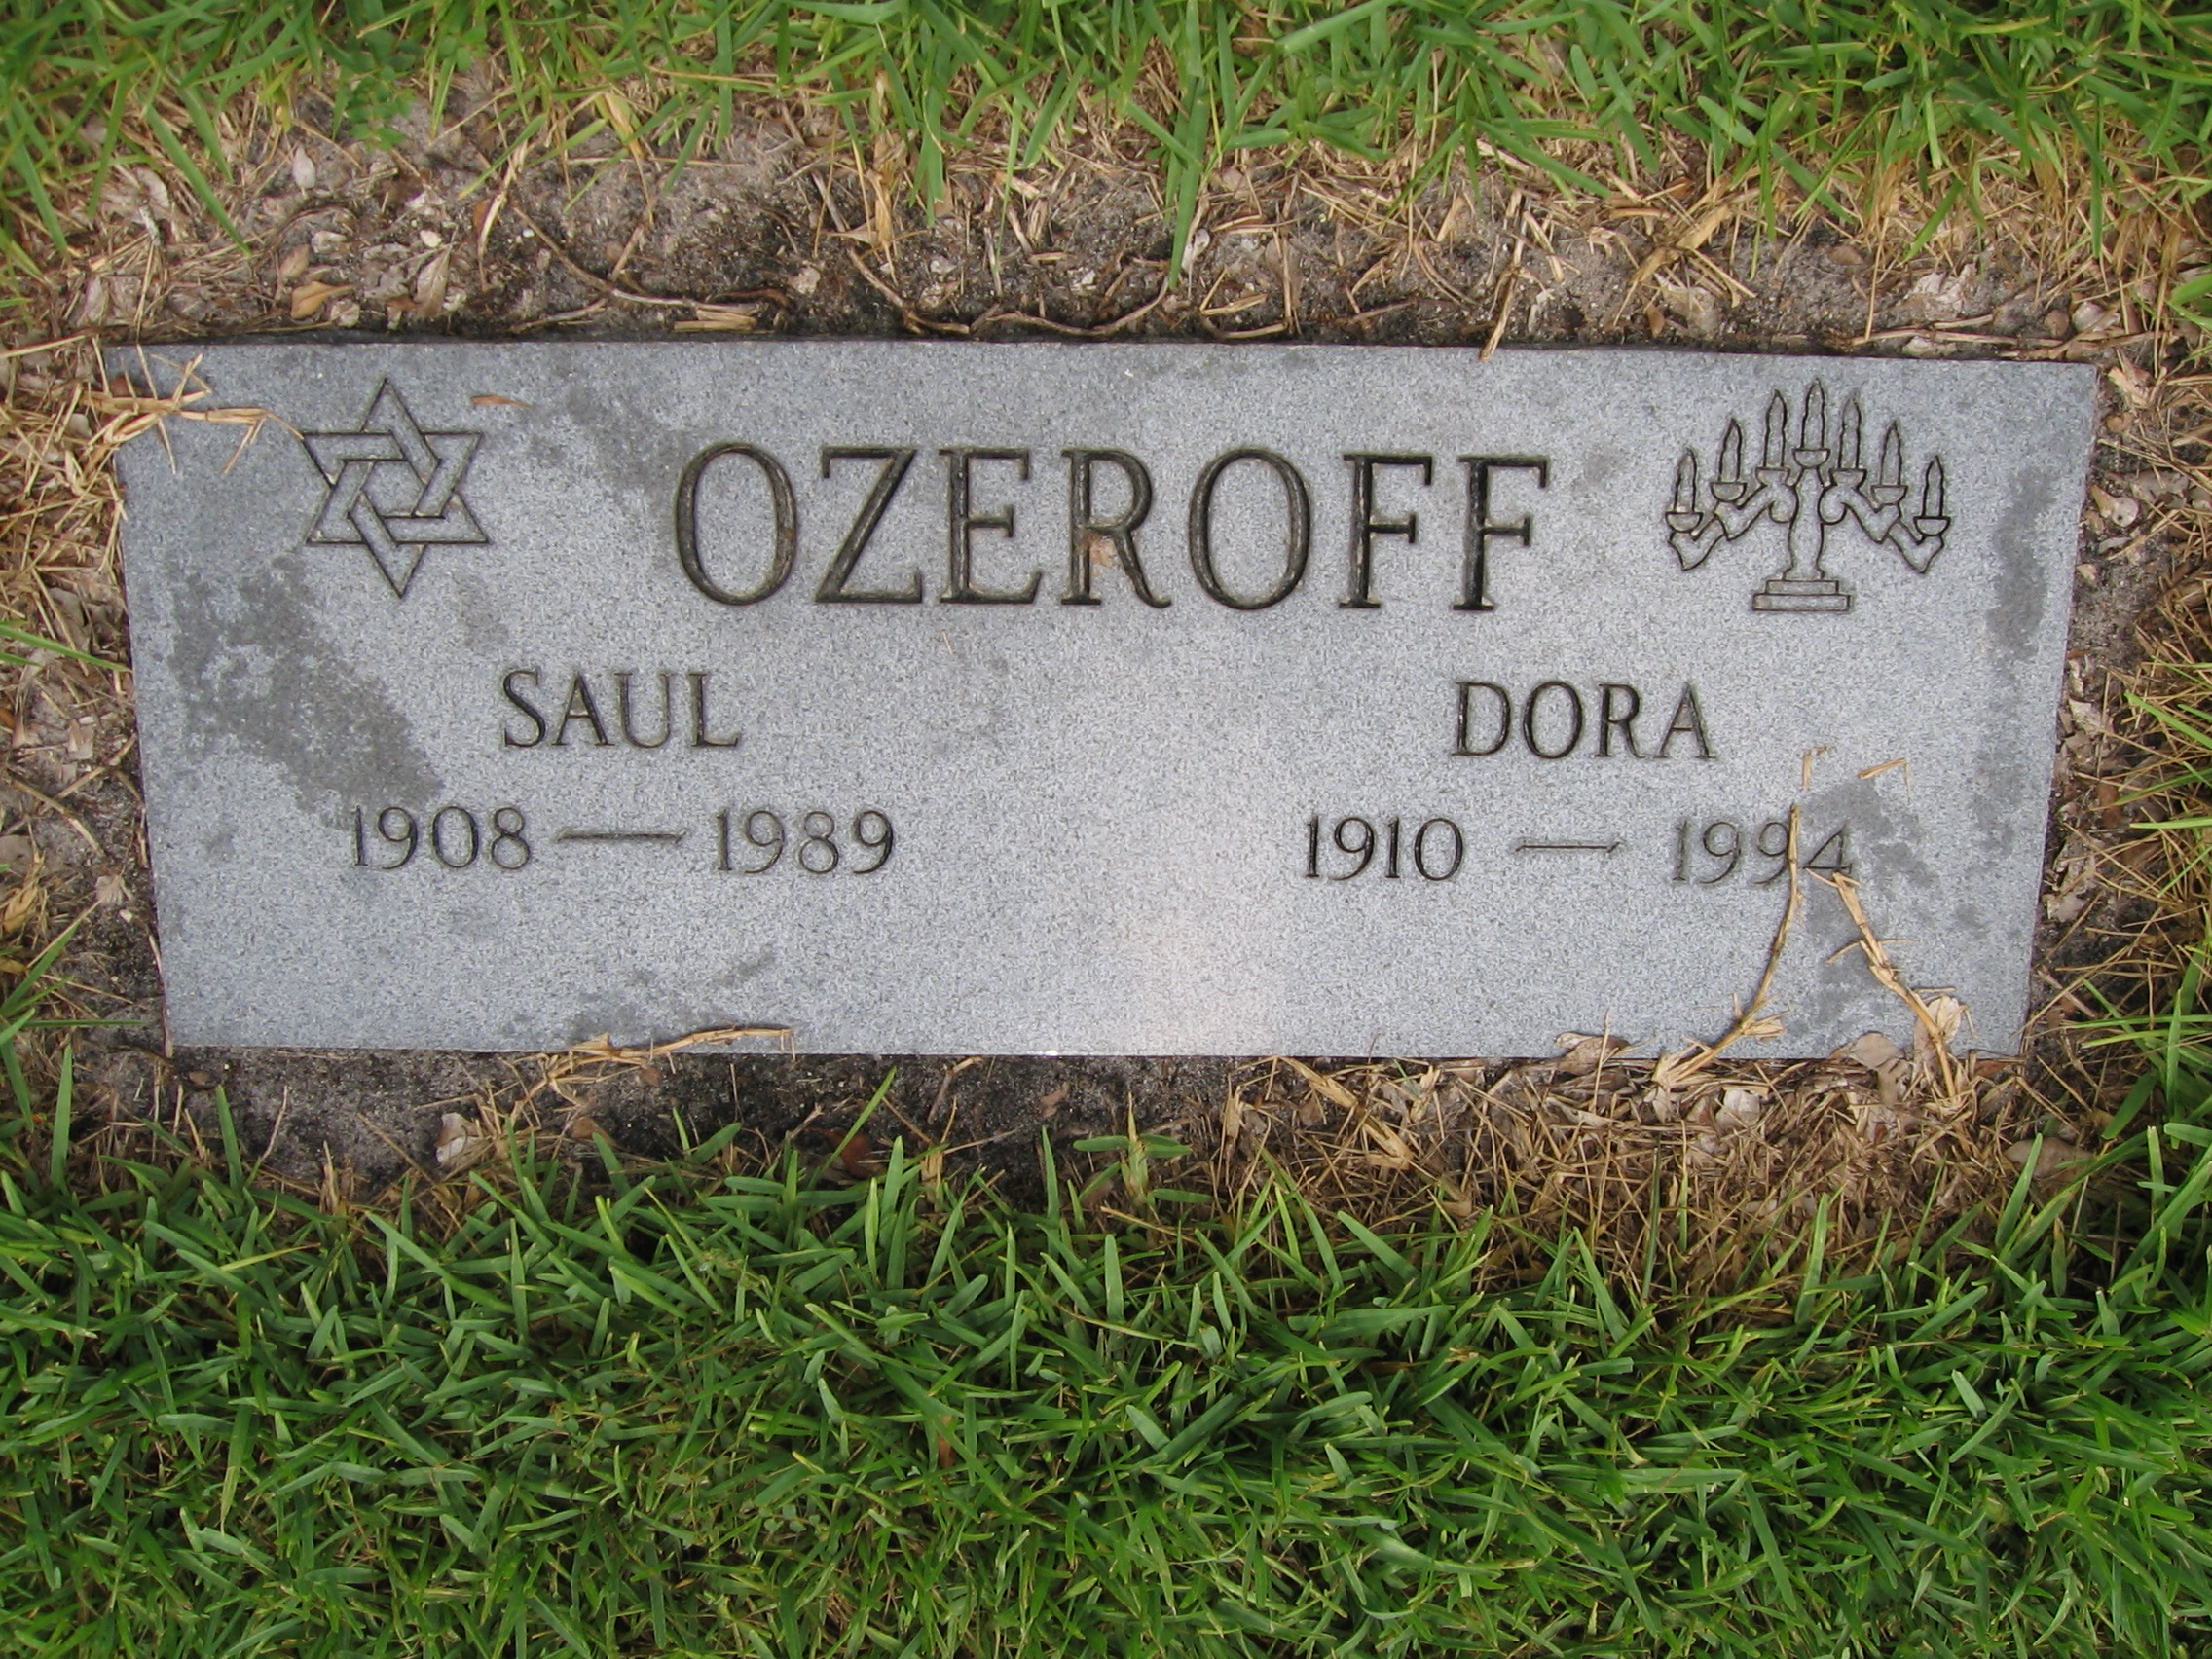 Dora Ozeroff